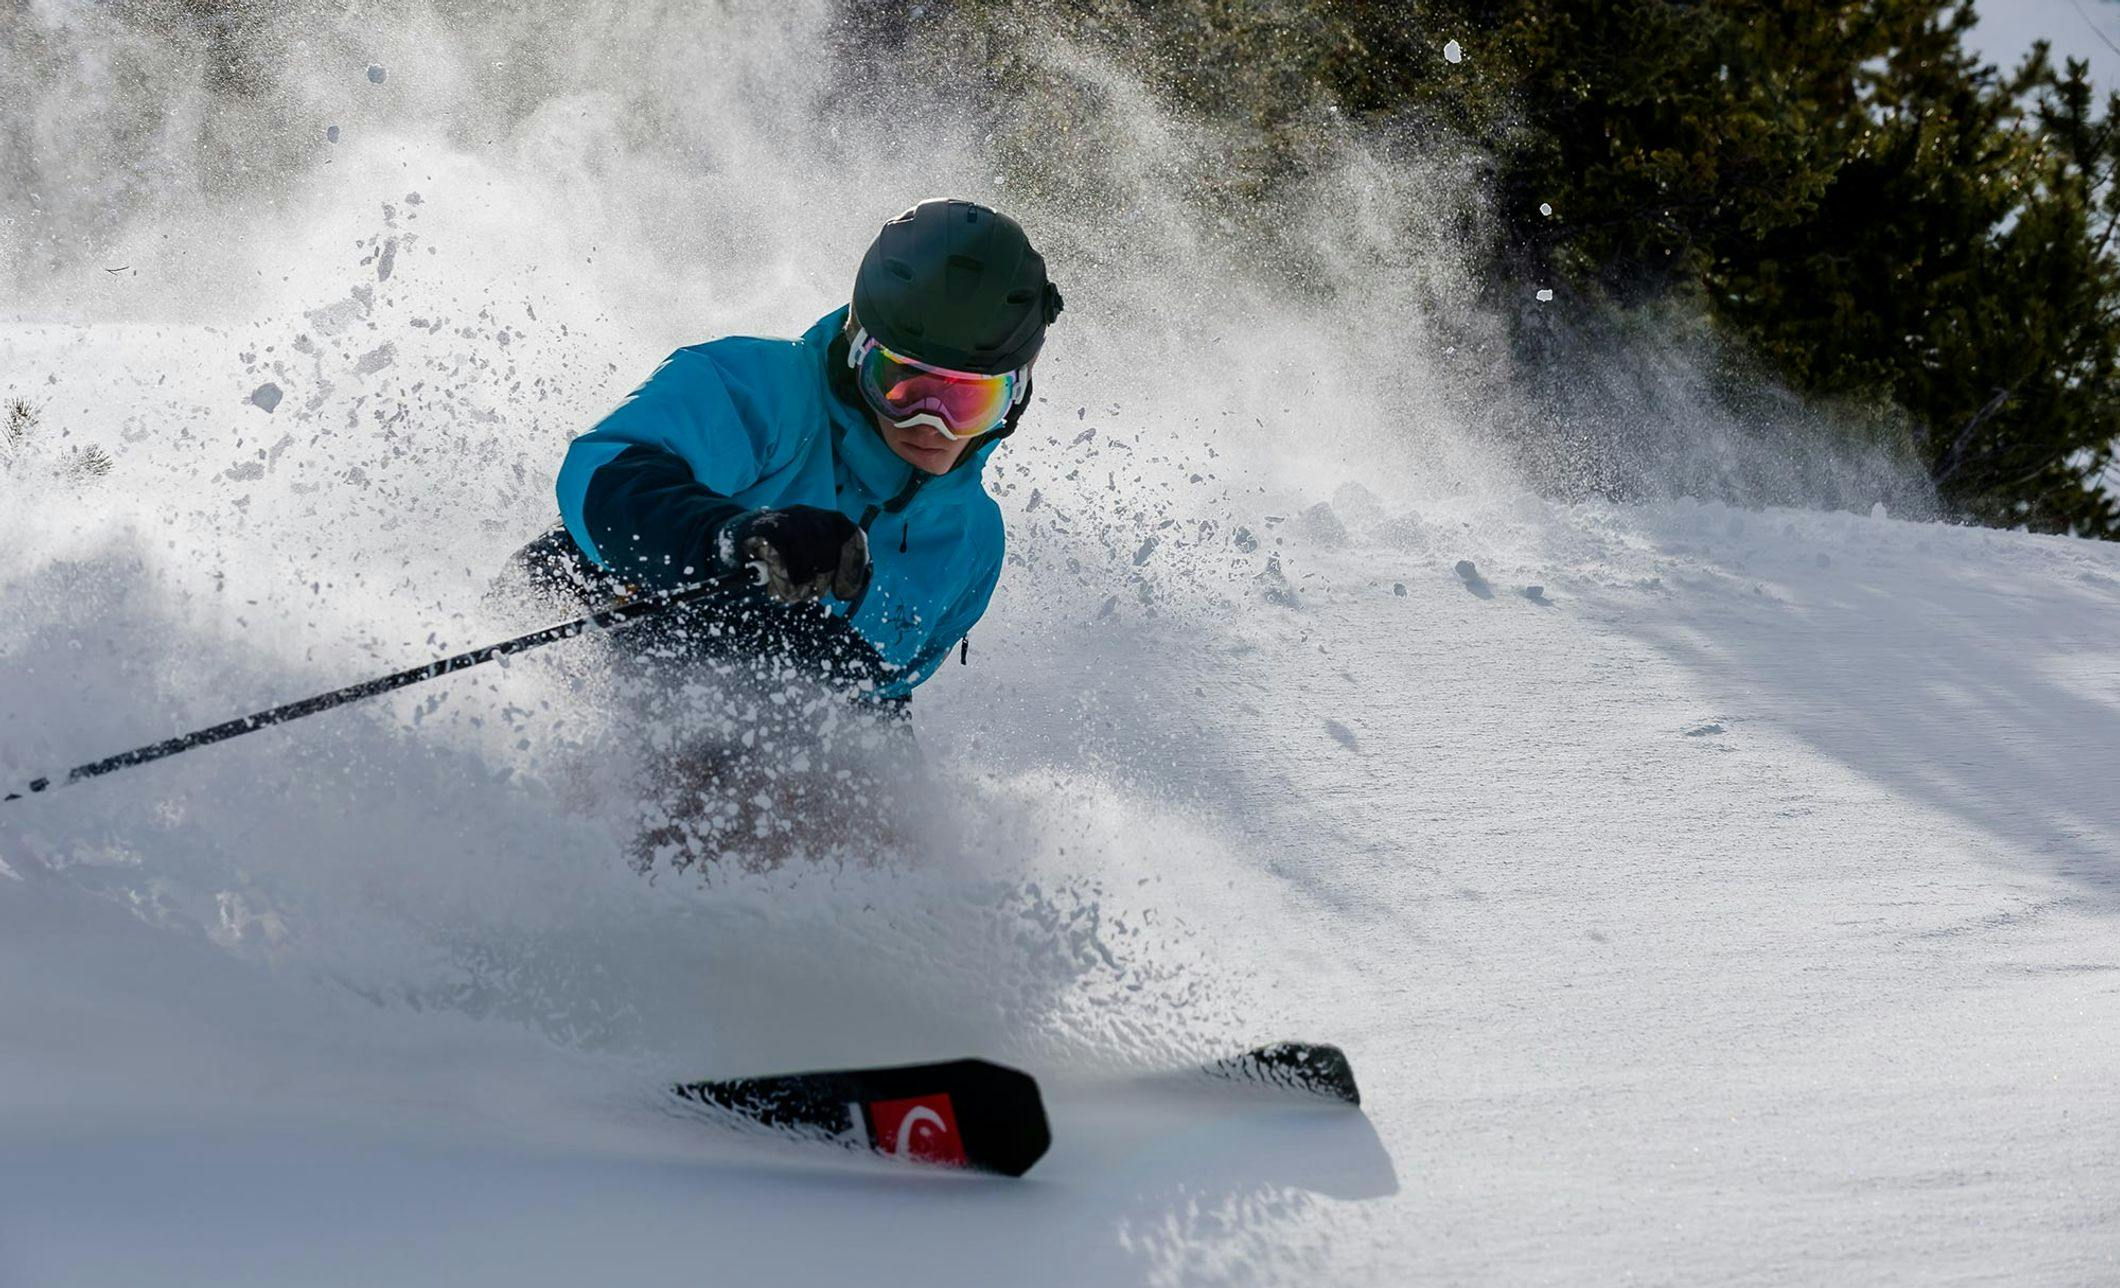 A skier makes a powder turn at the Mt. Norquay ski resort, Banff, AB